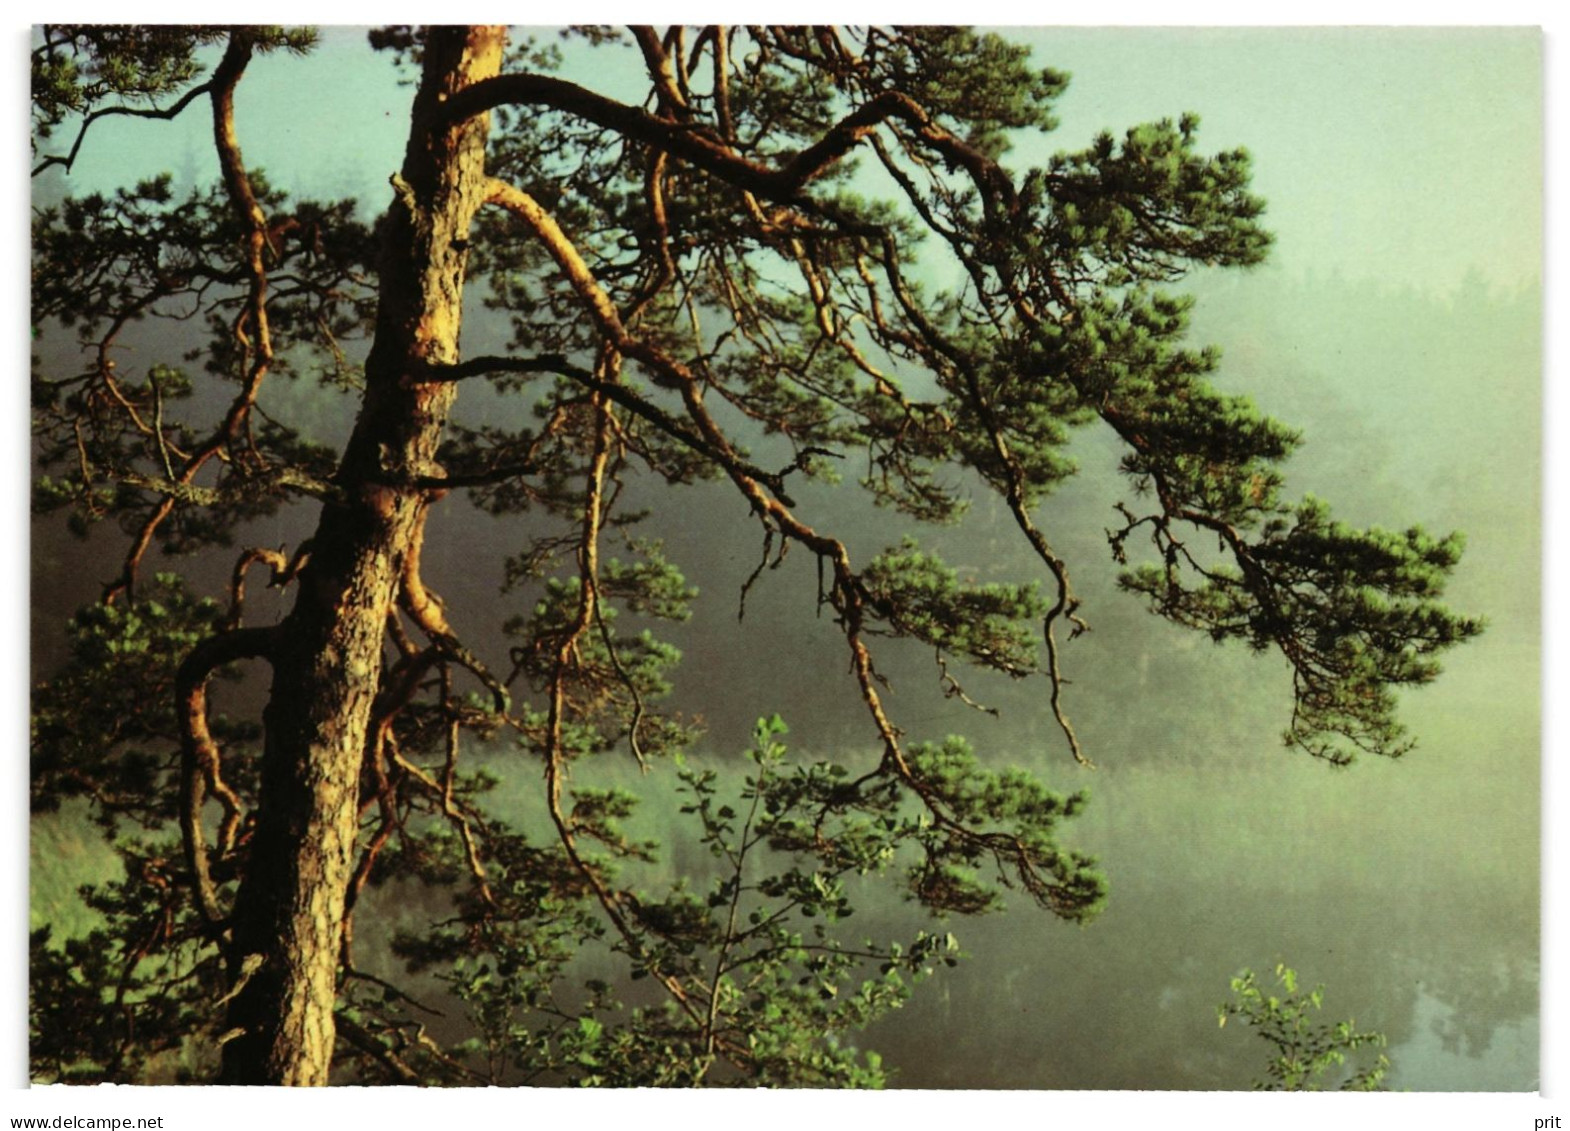 Pine Tree, Finland Finnish WWF Unused Postcard 1980s Publisher World Wide Fund For Nature, Serie Tunnelma 3, M.Rautkari - Rhinoceros